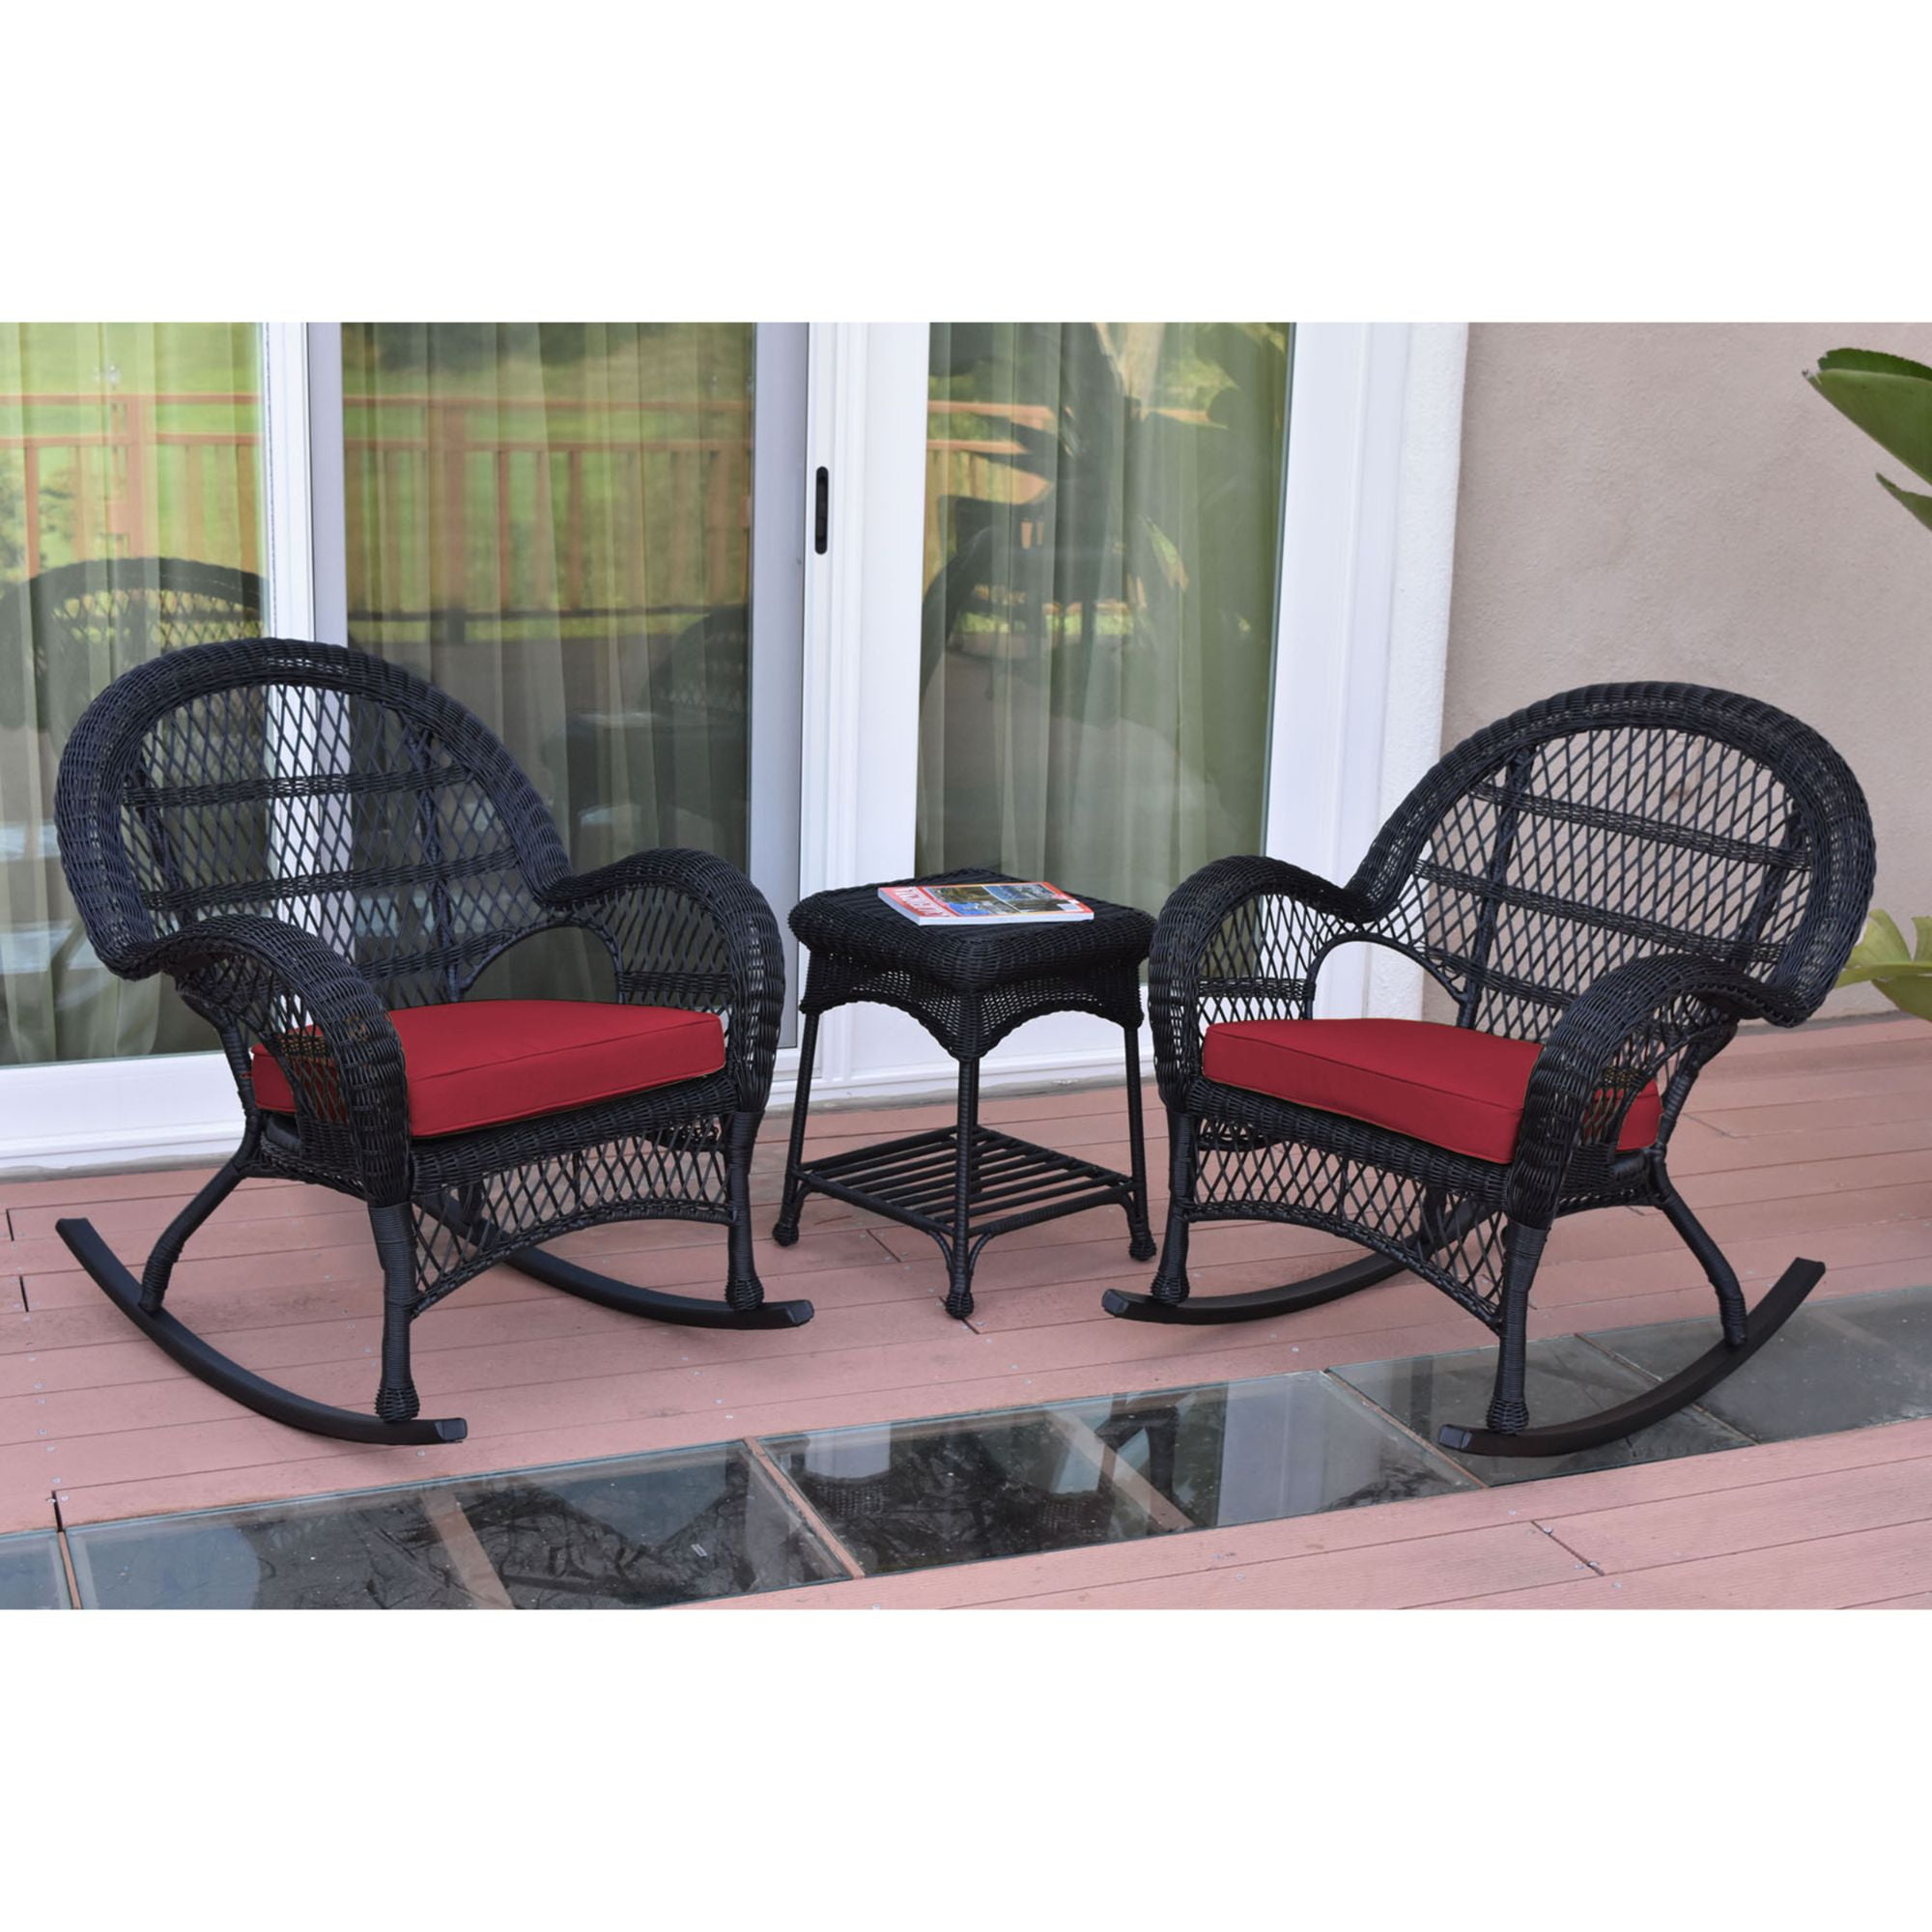 3-Piece Black Wicker Outdoor Furniture Patio Rocker Chair Set - Red